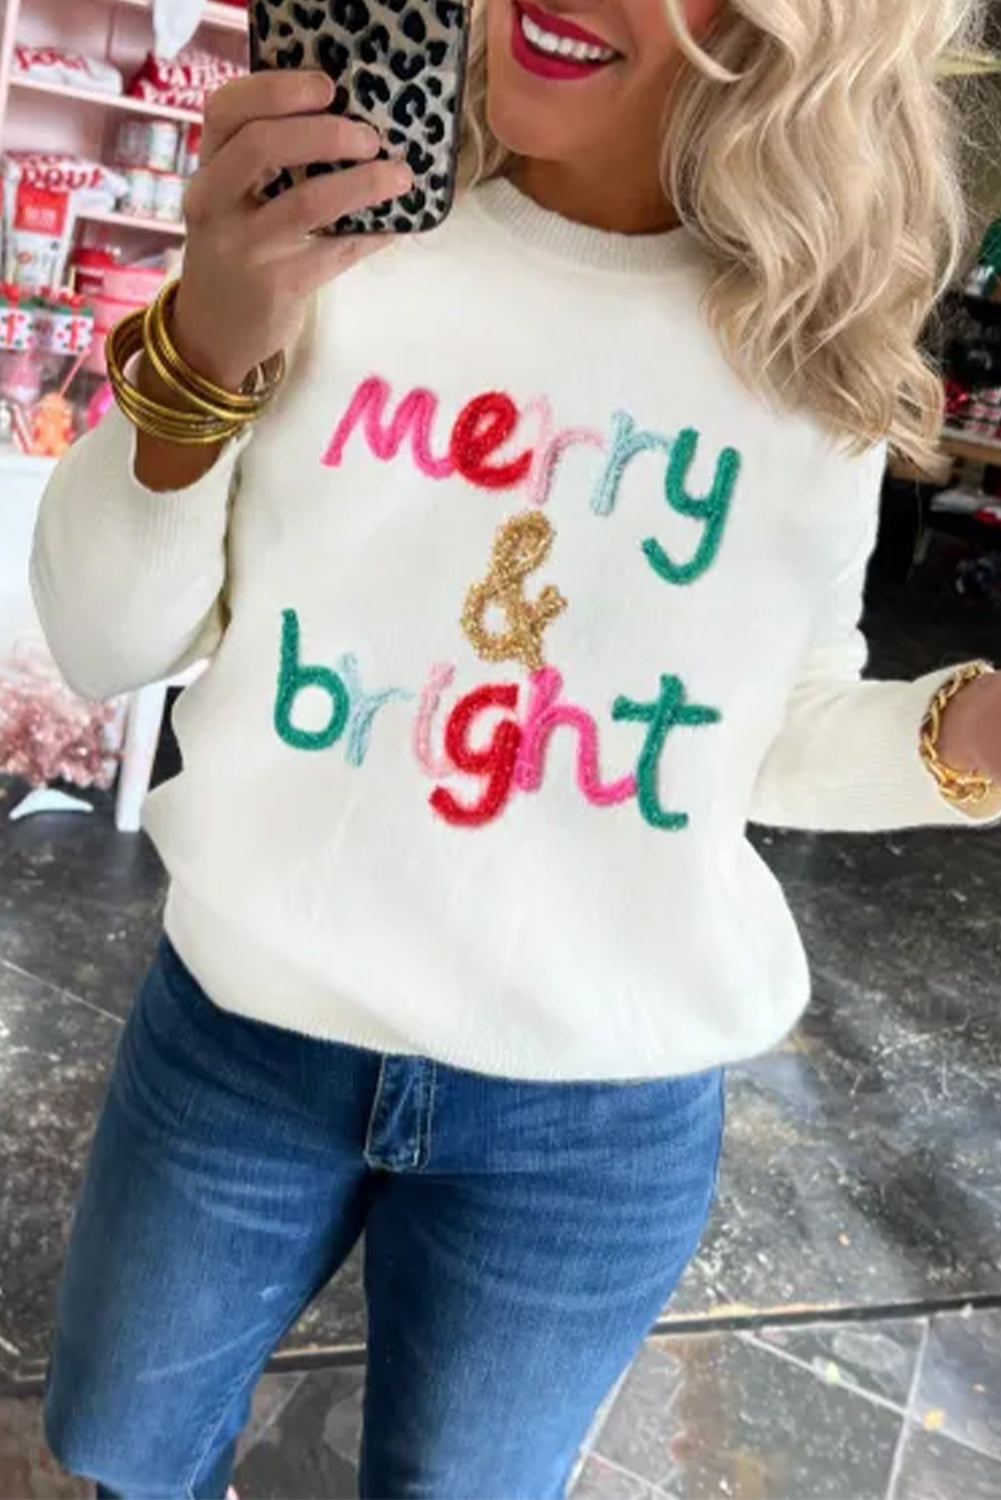 White Glitter Merry & Bright Round Neck Knit Sweater